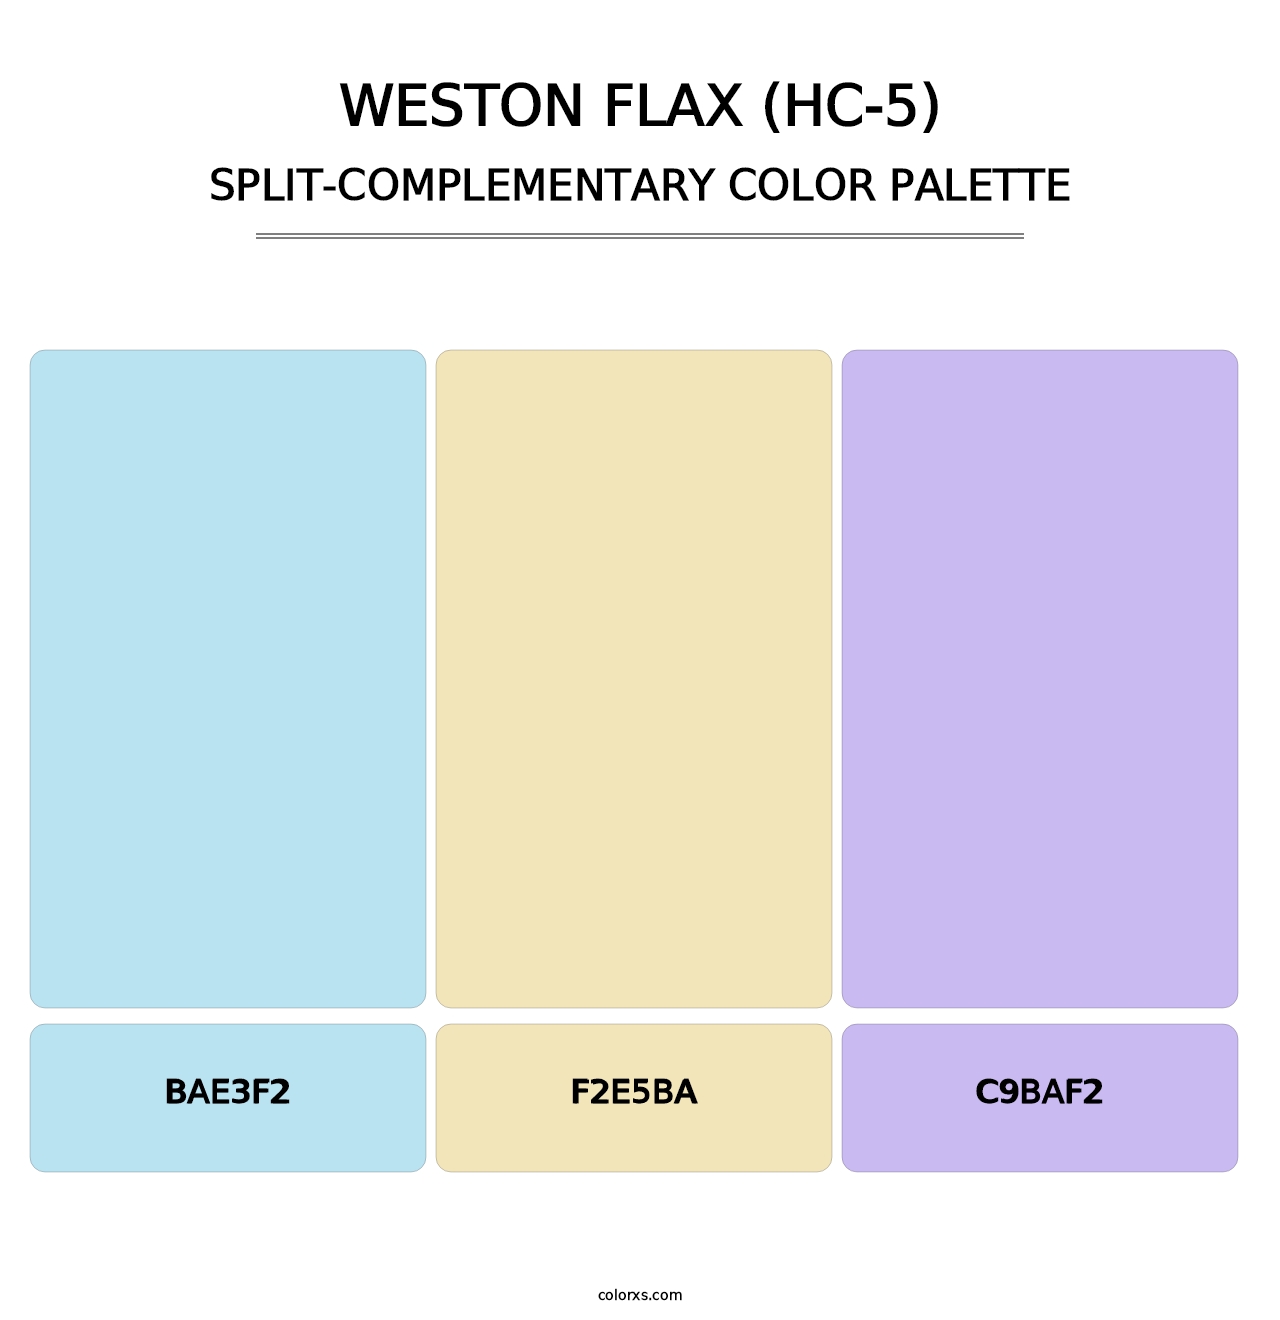 Weston Flax (HC-5) - Split-Complementary Color Palette